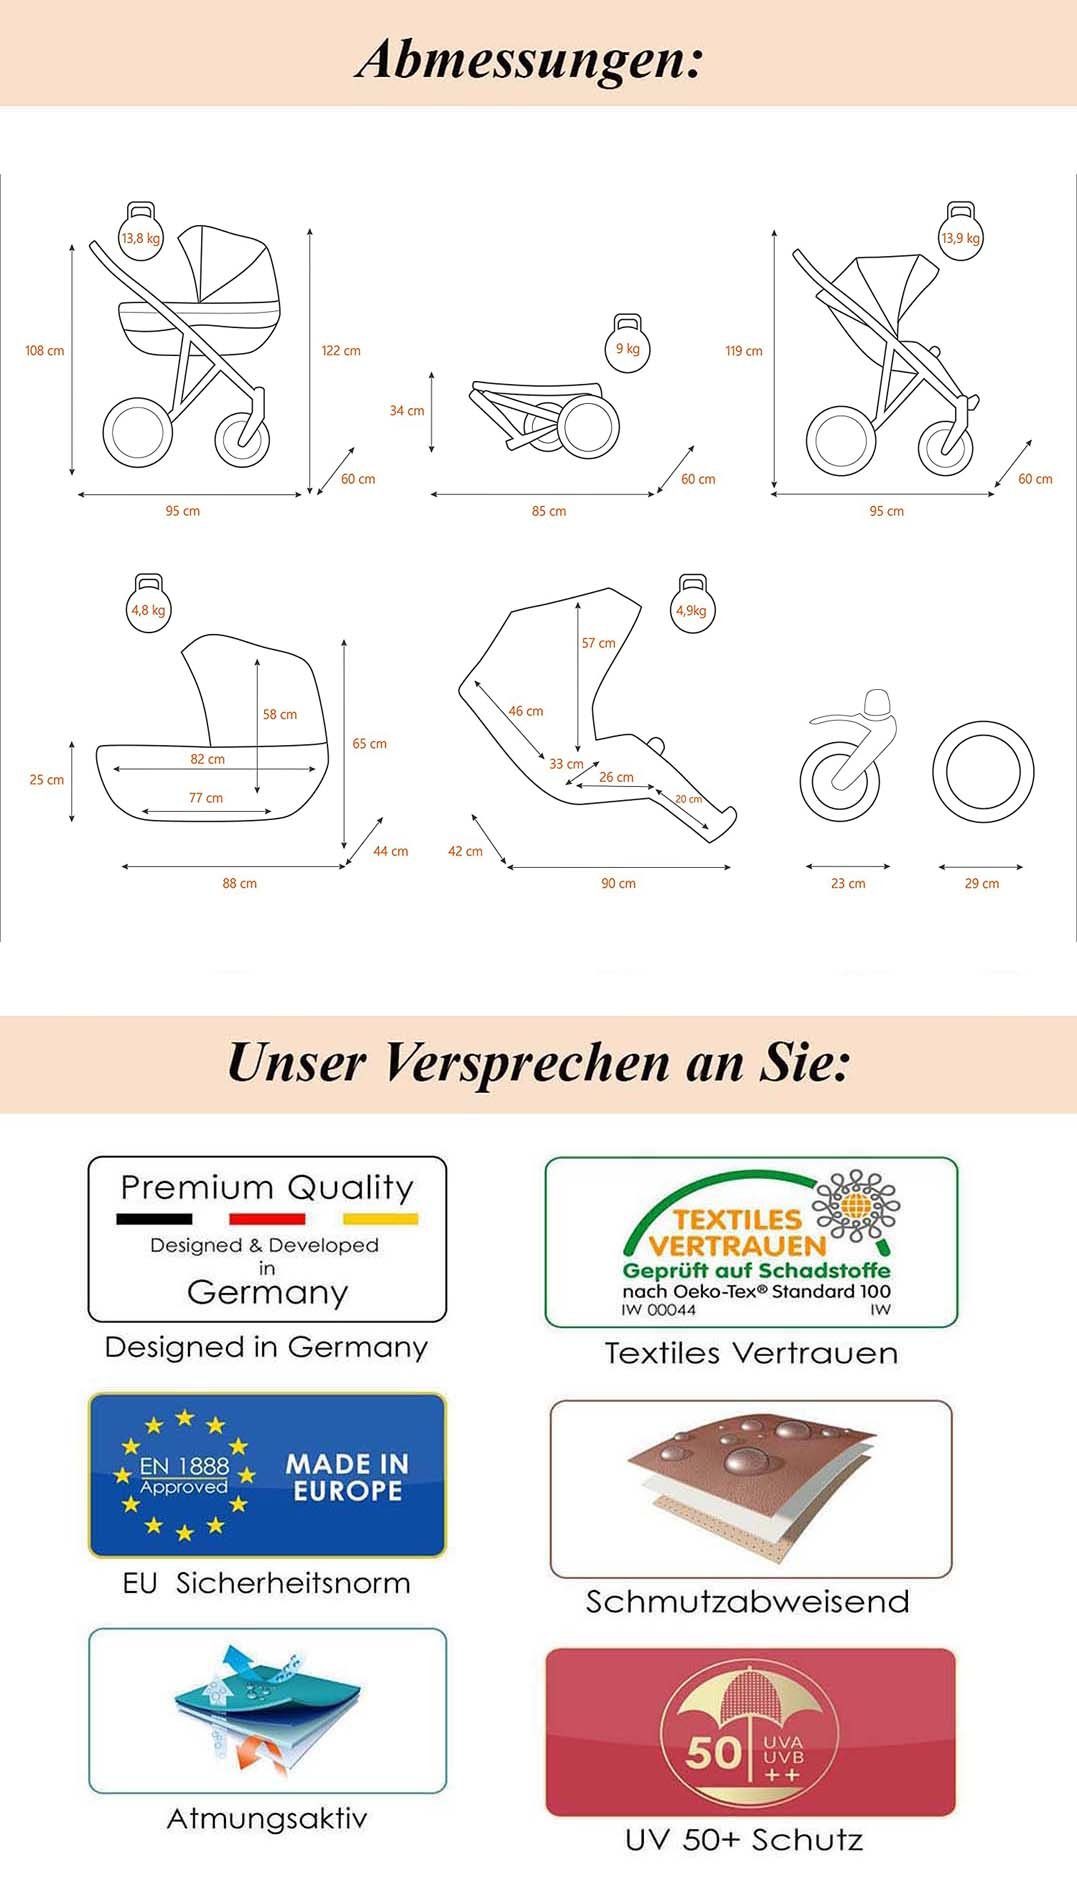 Premium Axxis babies-on-wheels 12 Kombi-Kinderwagen 14 - Designs = Kinderwagen-Set - Teile Gestell 1 2 Dunkelgrün gold in in